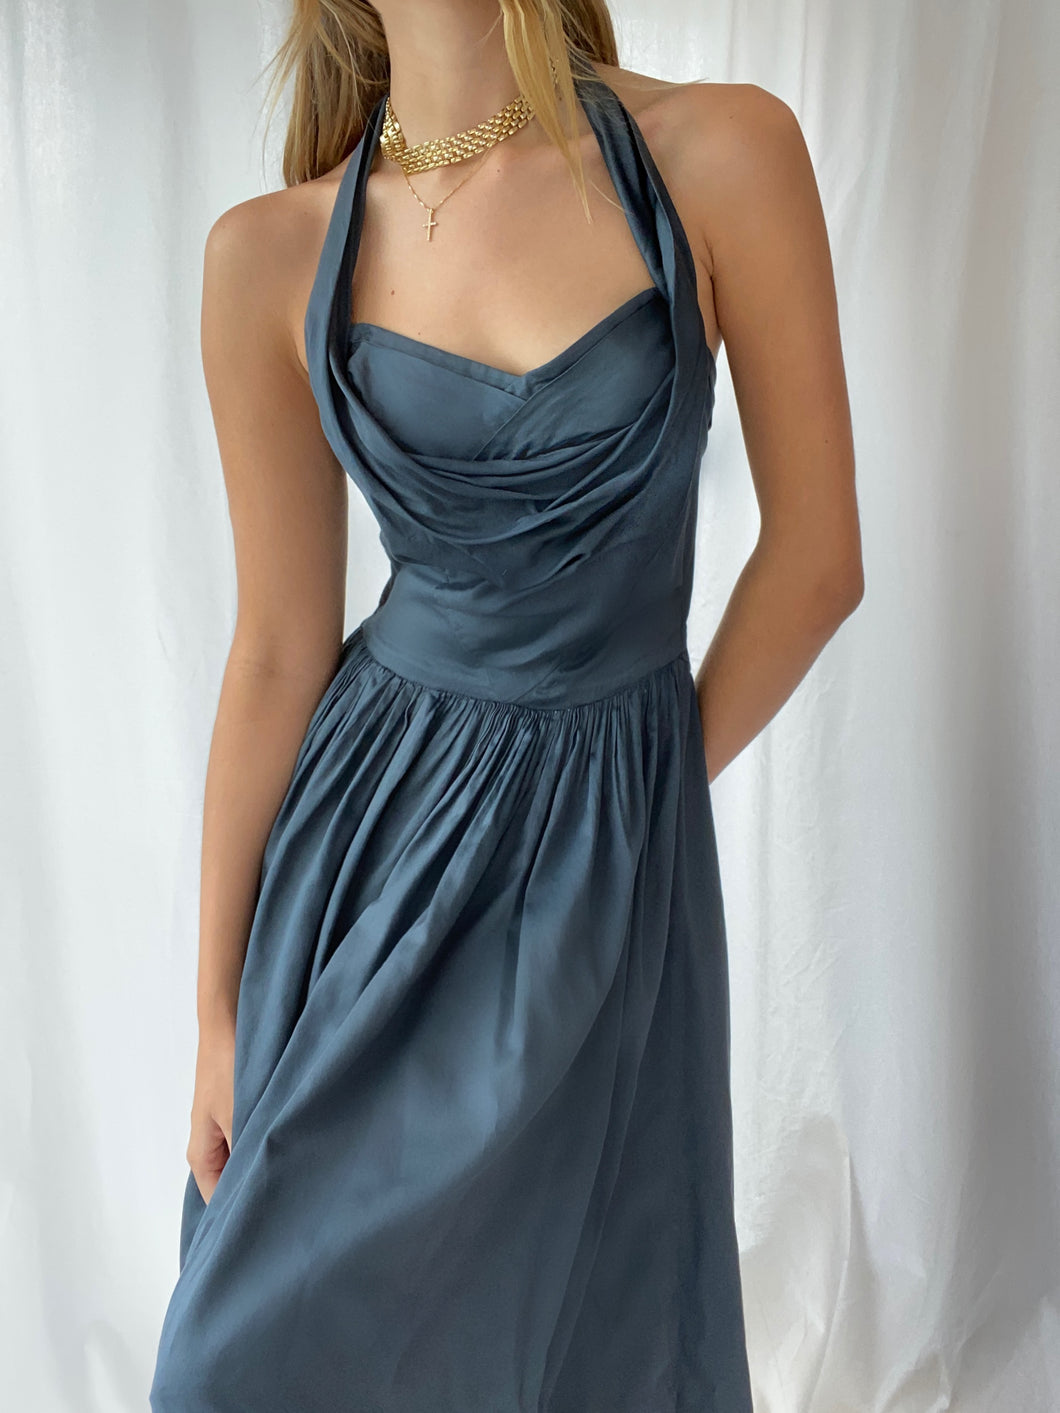 Vintage Vivienne Westwood Halter Dress